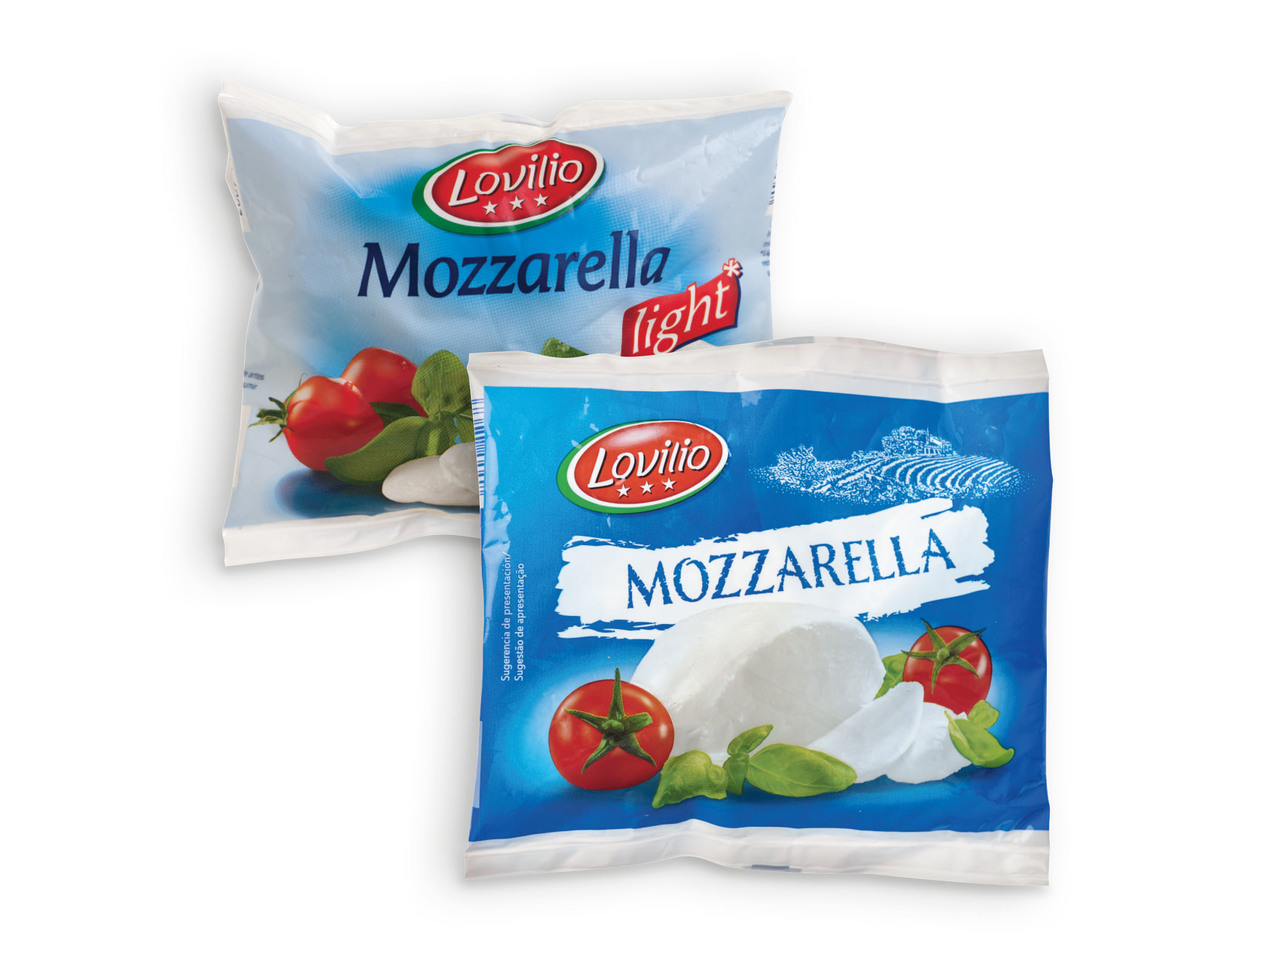 LOVILIO(R) Mozzarella Clássica / Light